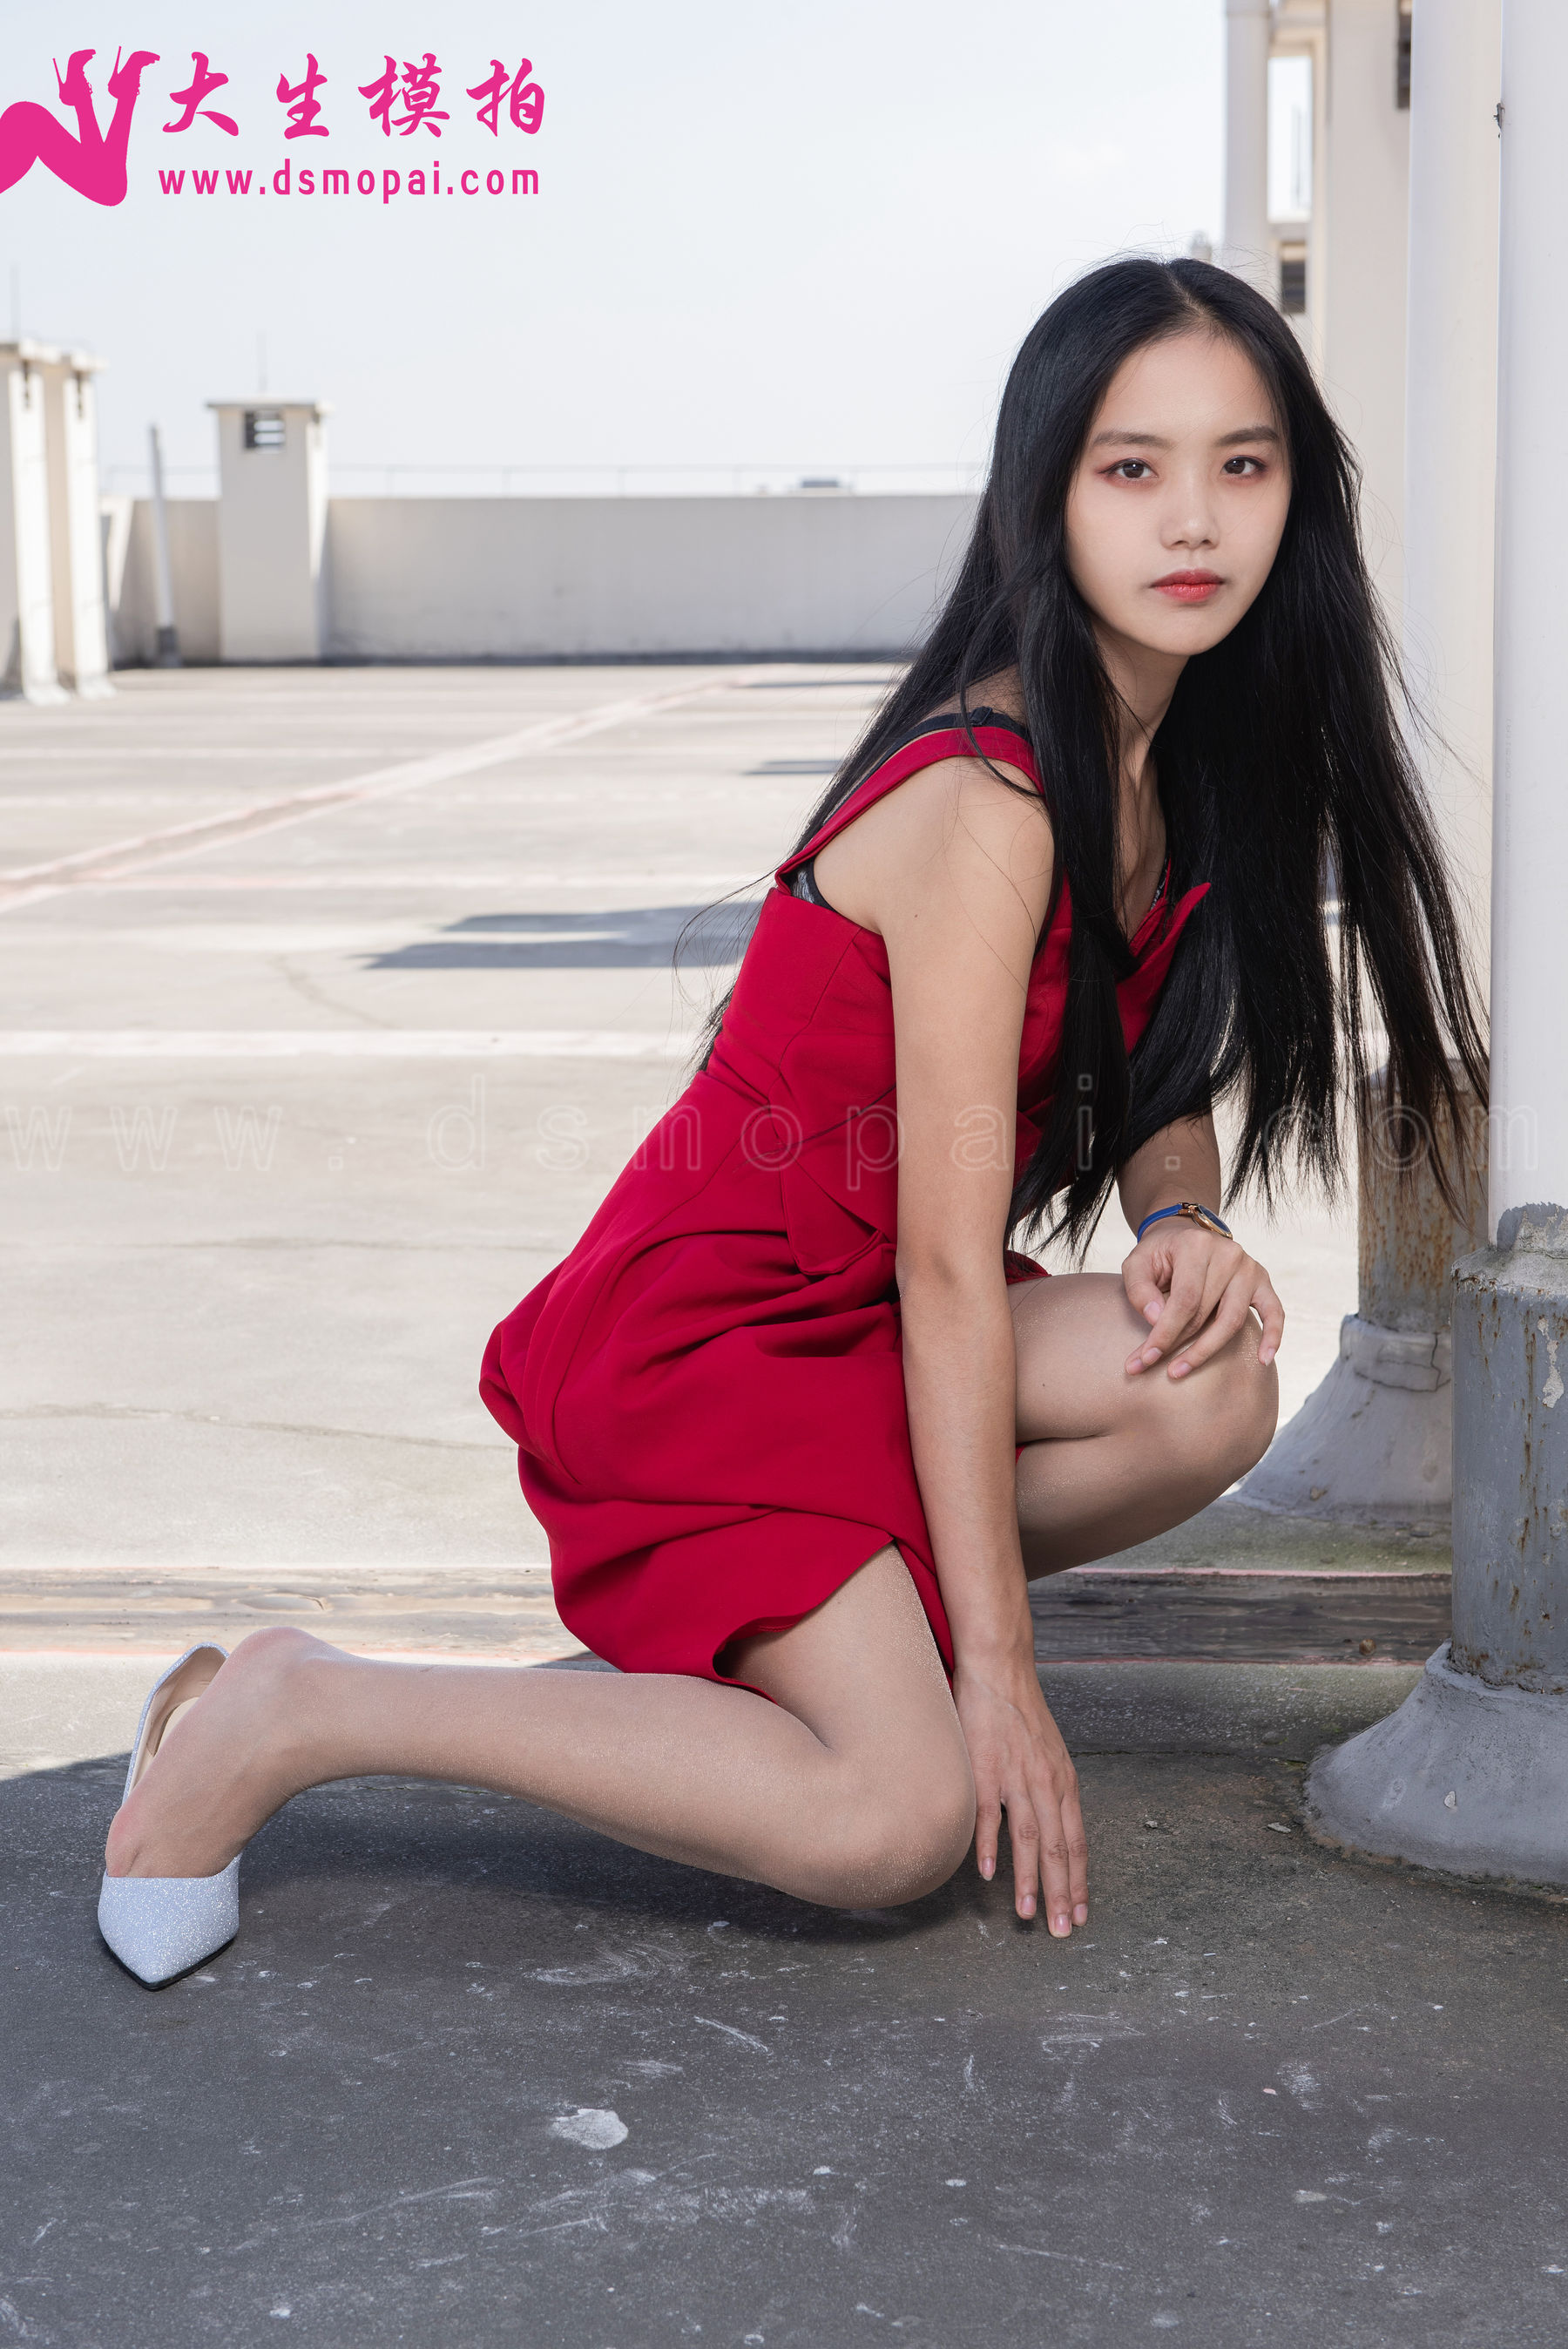 [大 生 模]] No.155 Xiao Yin – red girl